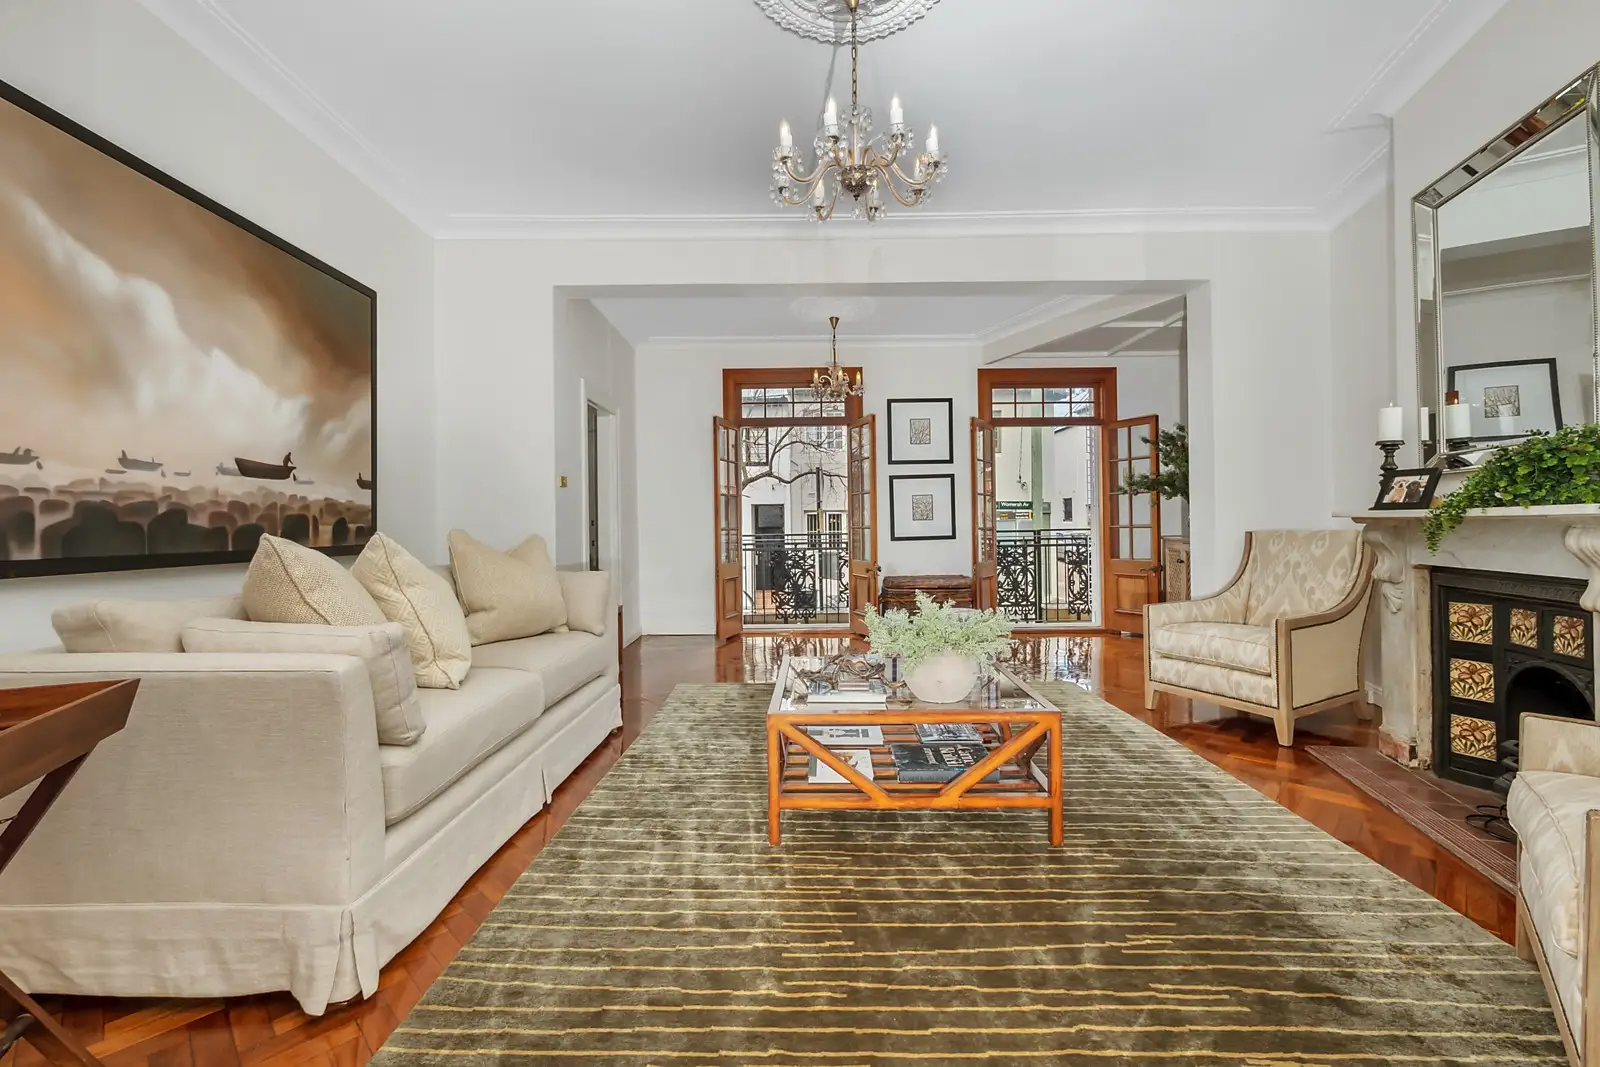 Photo #2: 47 Womerah Avenue, Darlinghurst - Sold by Sydney Sotheby's International Realty